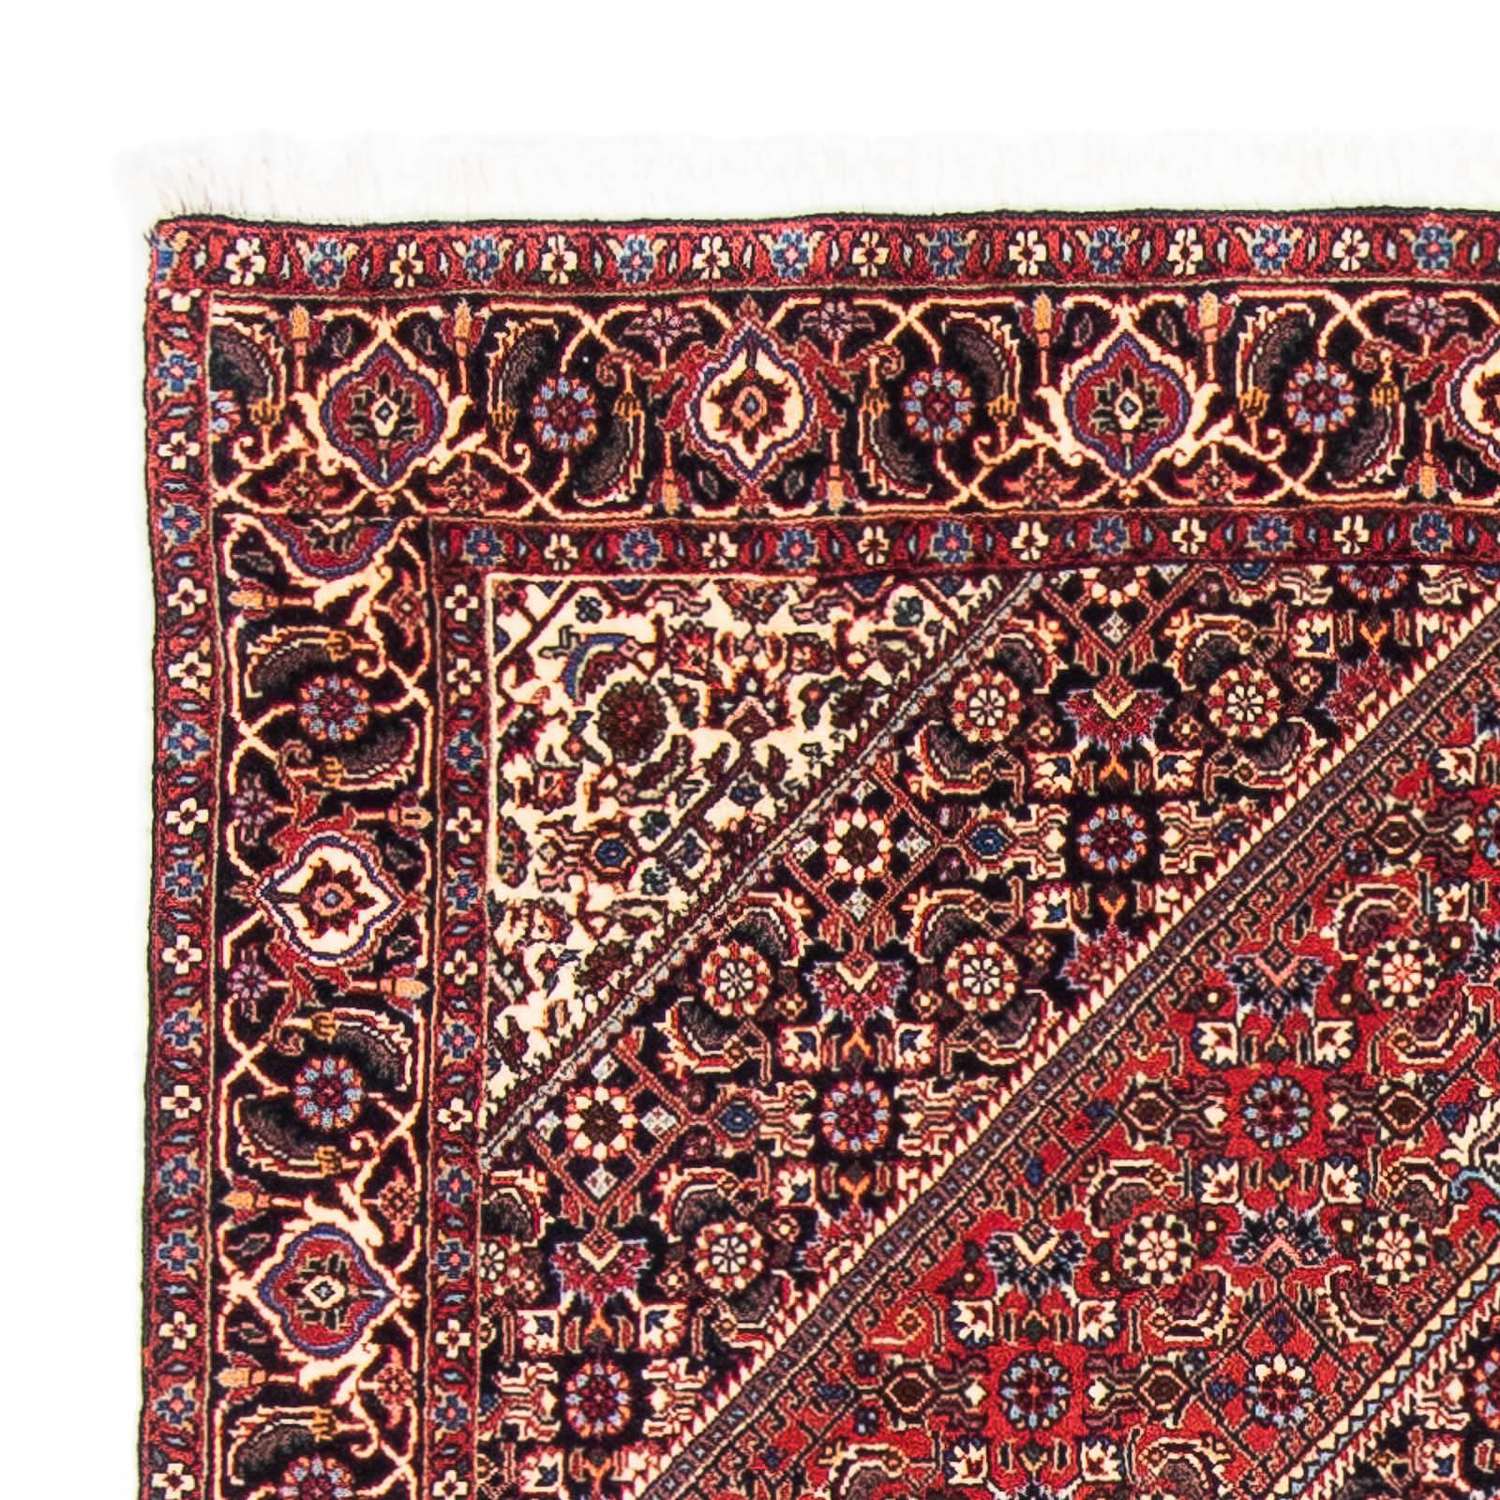 Persisk teppe - Bijar - 170 x 110 cm - rød